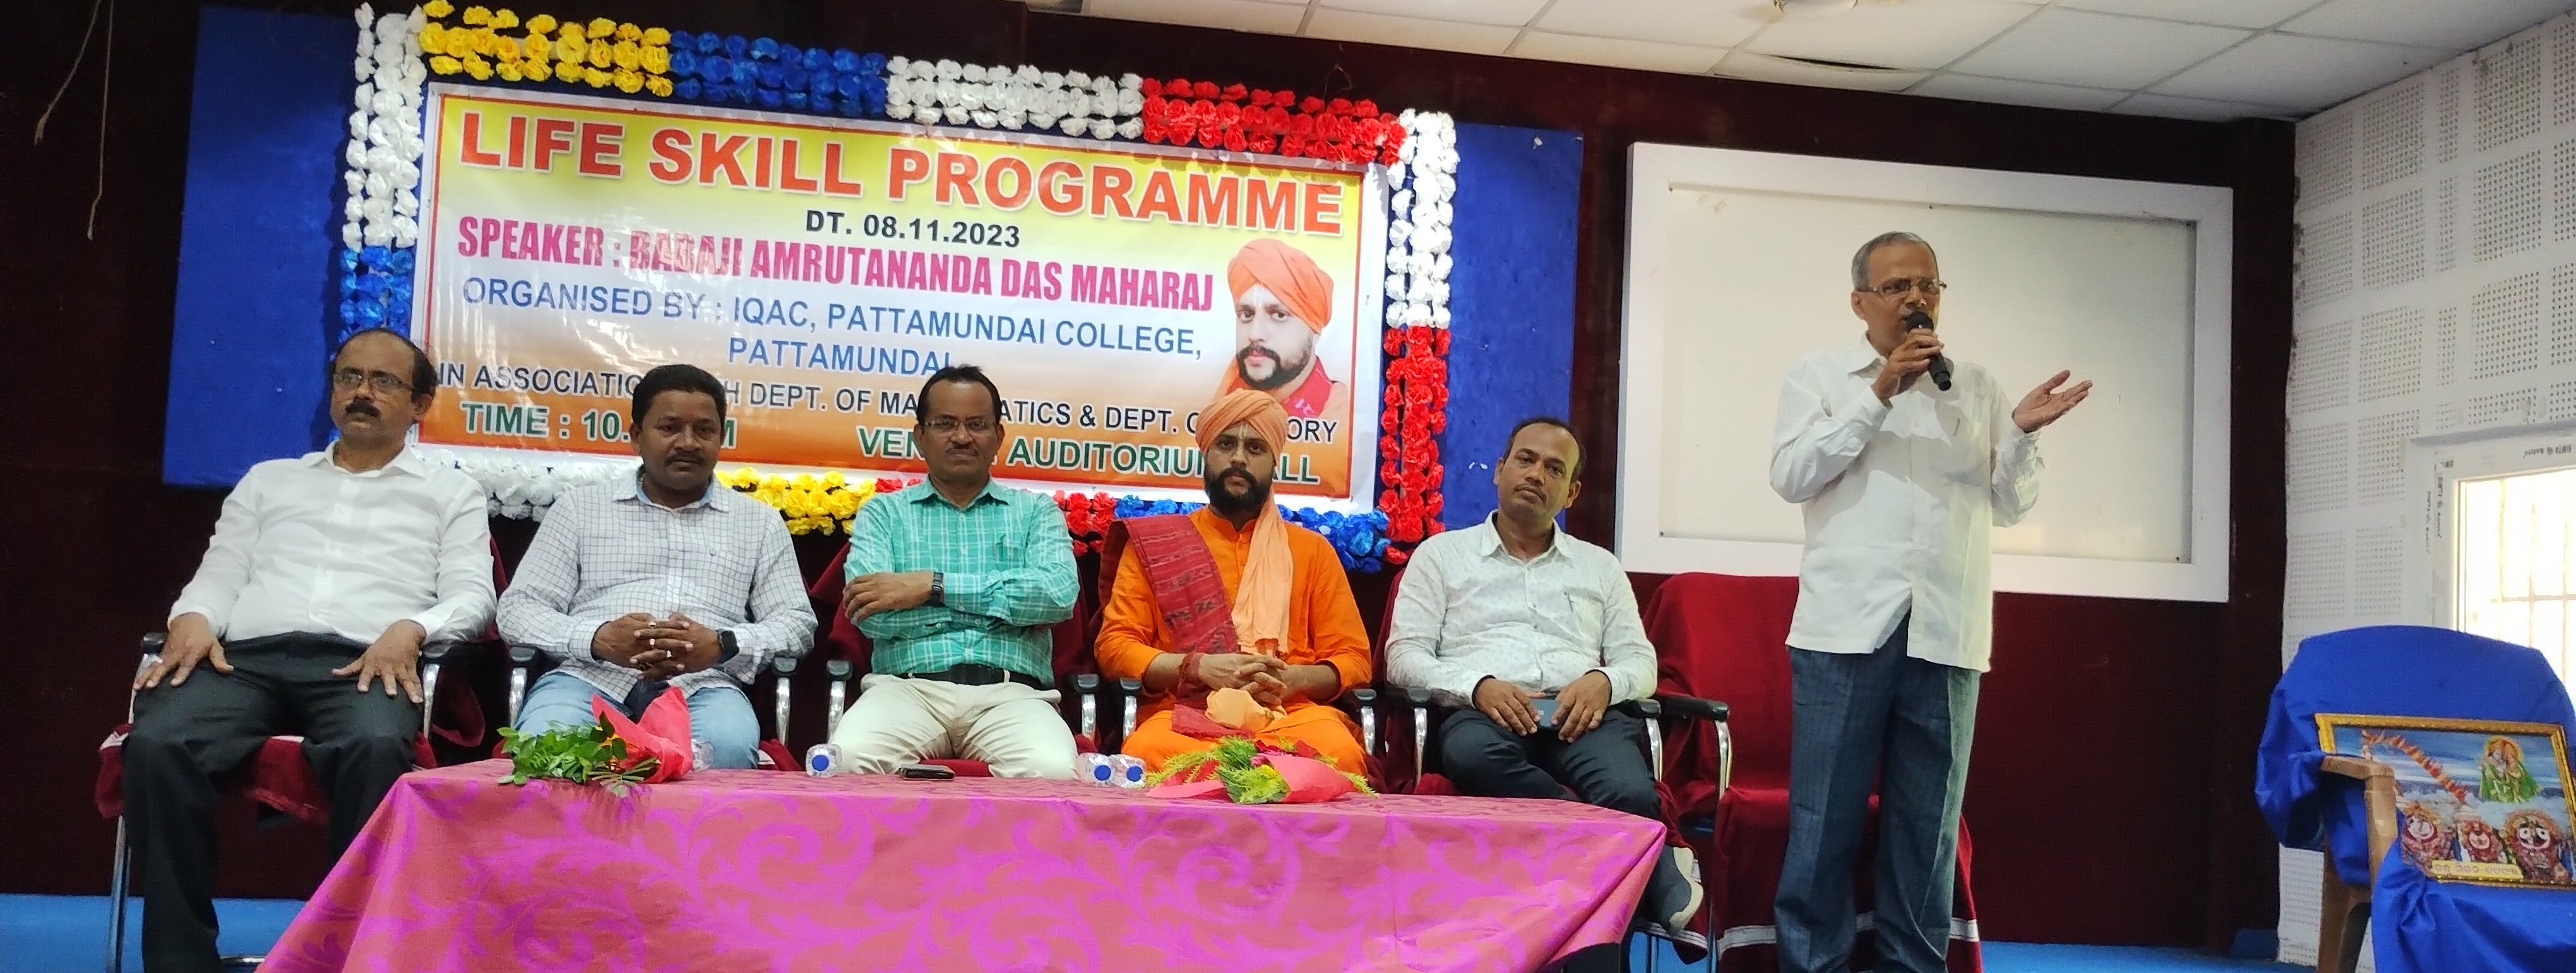 Life Skiill Programme : Babaji Amrutananda Das Maharaj